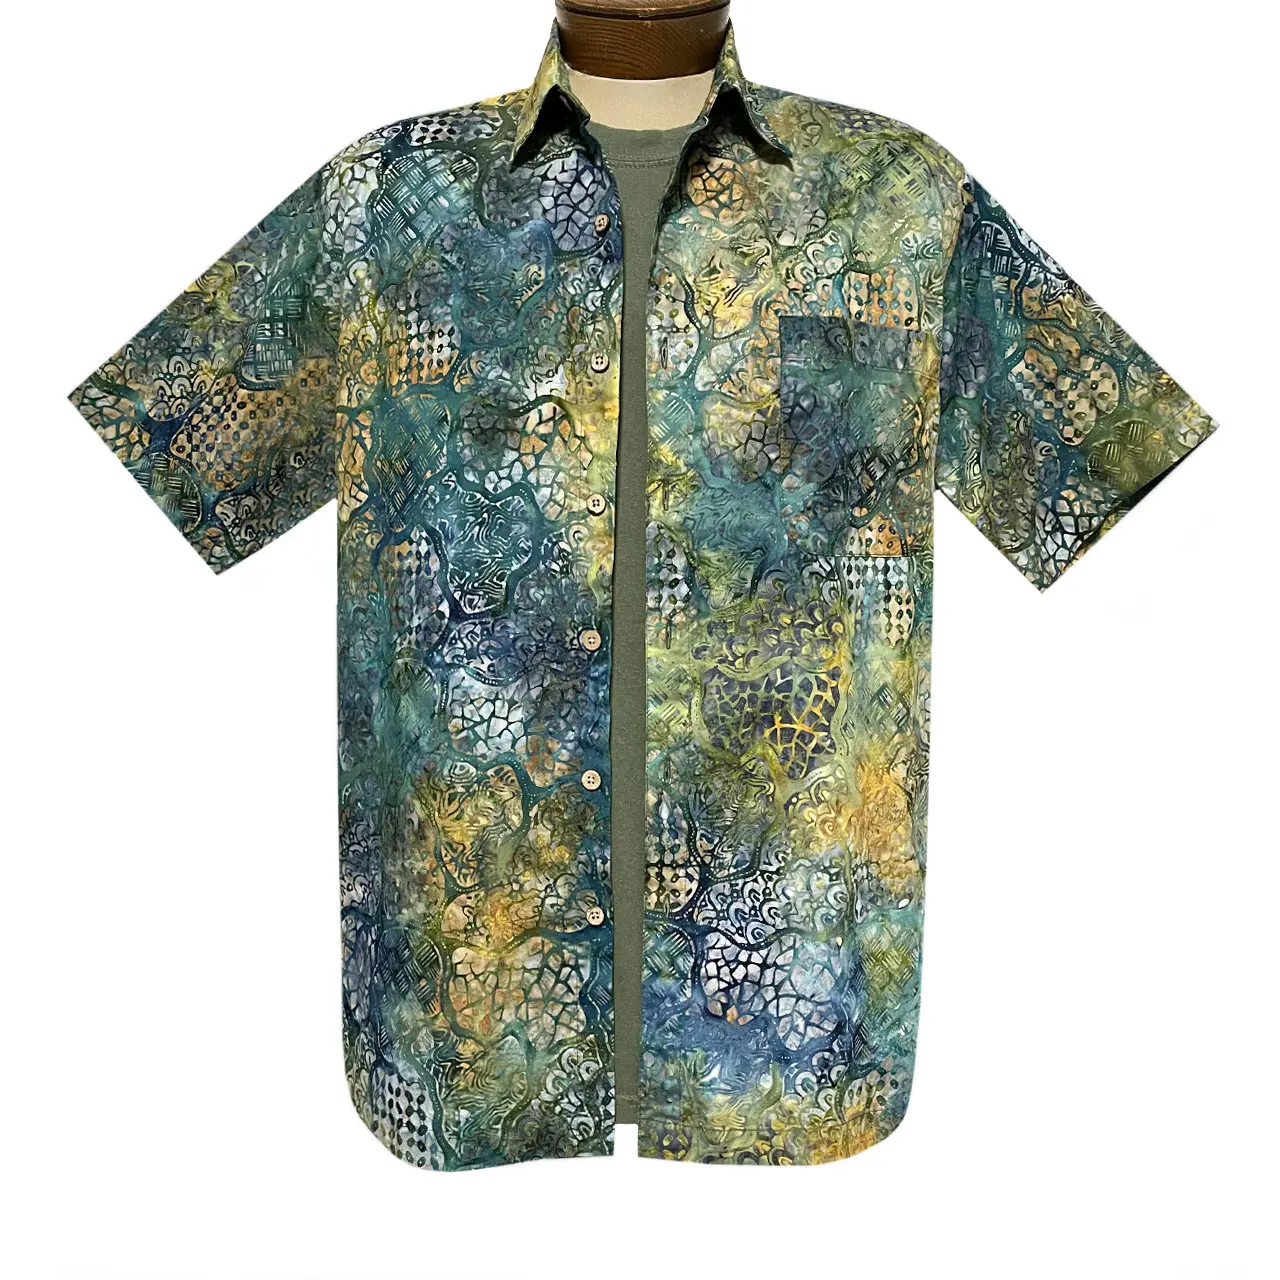 Men's R. Options Batik Short Sleeve Cotton Shirt, Cellular Abstract 62347-4  Green/Gold/Blue (XL, ONLY!) - Richard David for Men